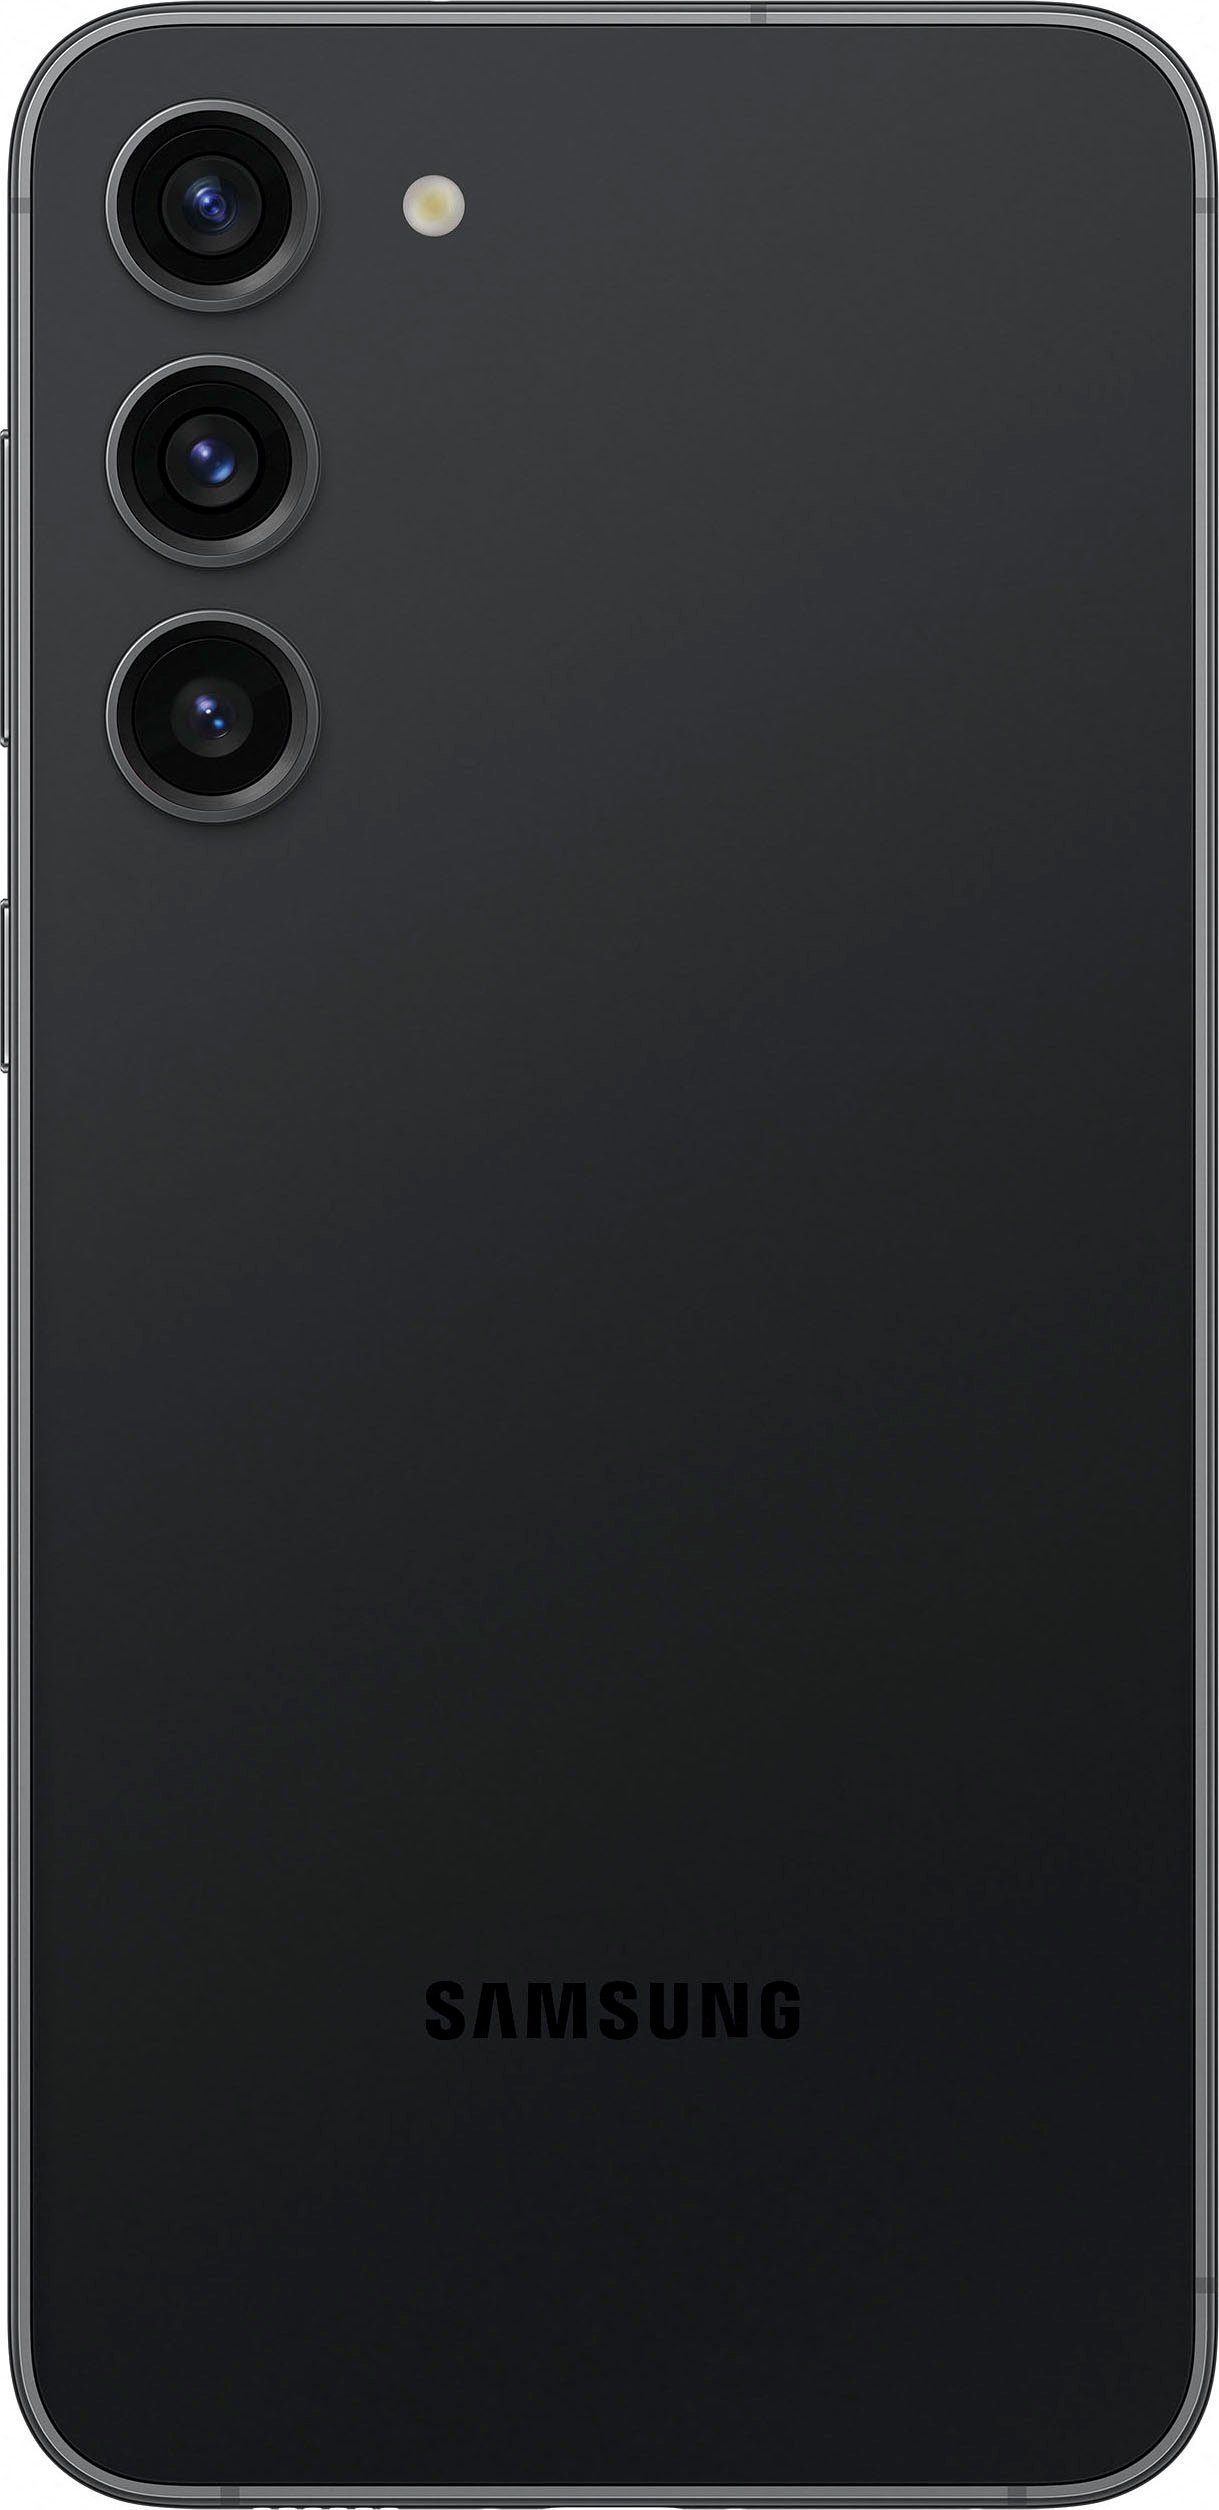 MP Galaxy cm/6,6 Kamera) GB 256 Samsung 50 (16,65 S23+ Speicherplatz, schwarz Smartphone Zoll,